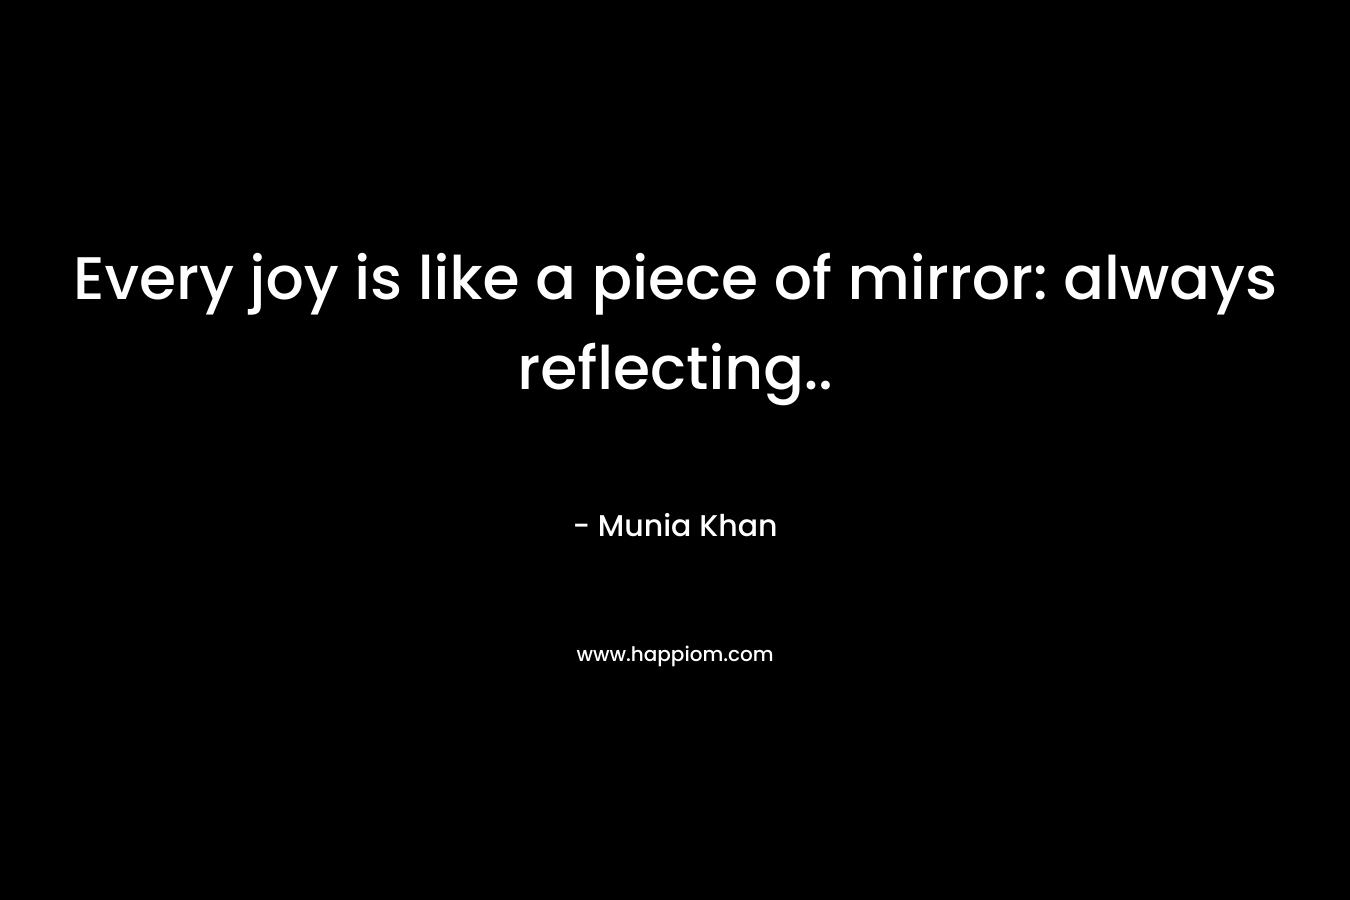 Every joy is like a piece of mirror: always reflecting..